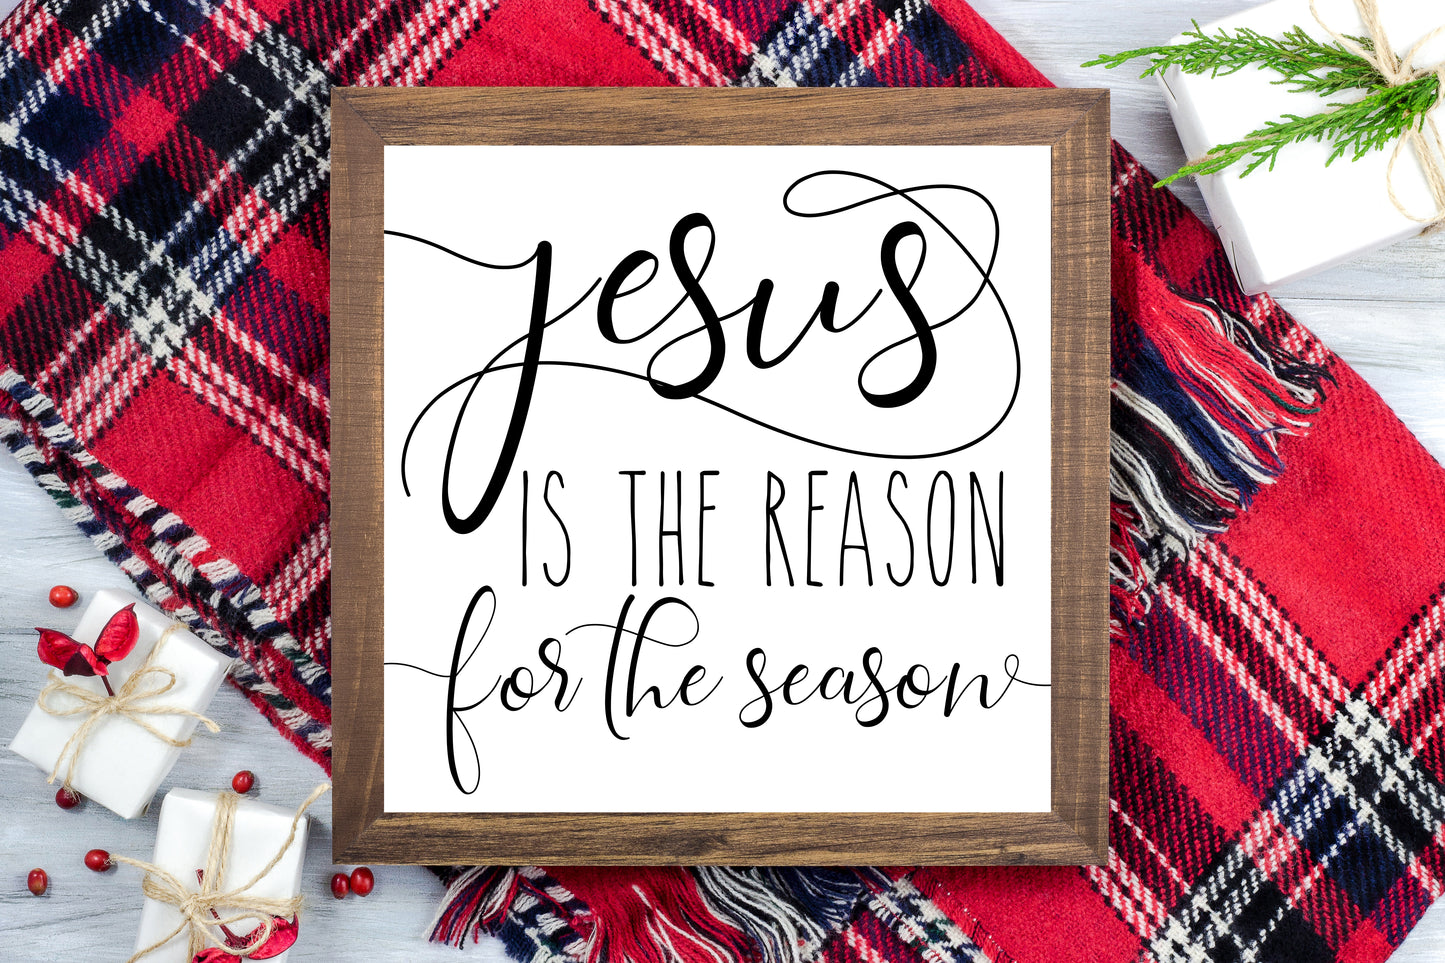 Jesus is the Reason for the Season -  Christmas Printable Sign Farmhouse Style  - Digital File